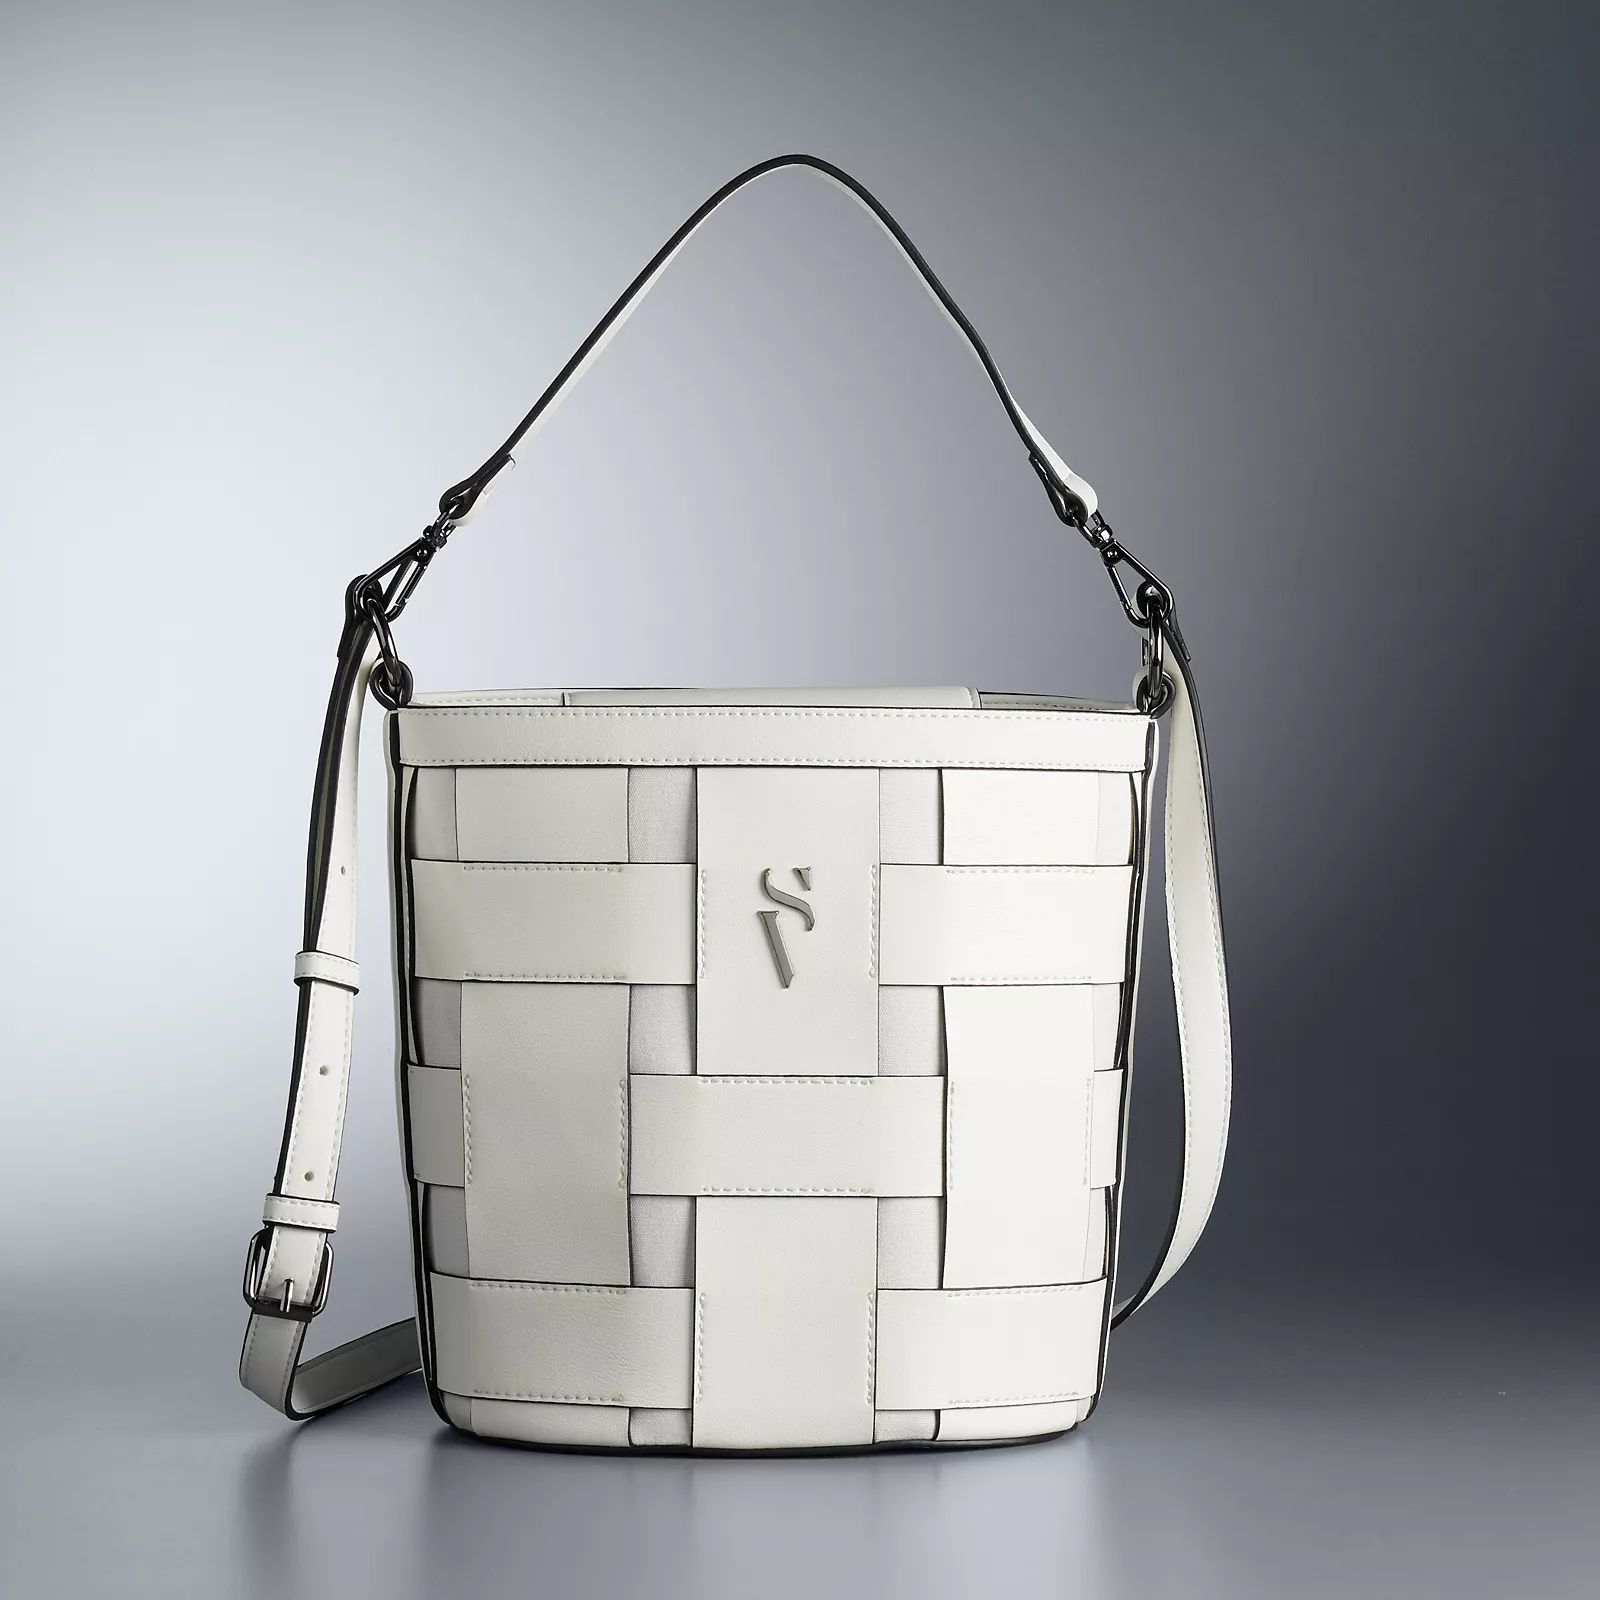 Simply Vera Vera Wang Woven Bucket Bag, White | Kohl's